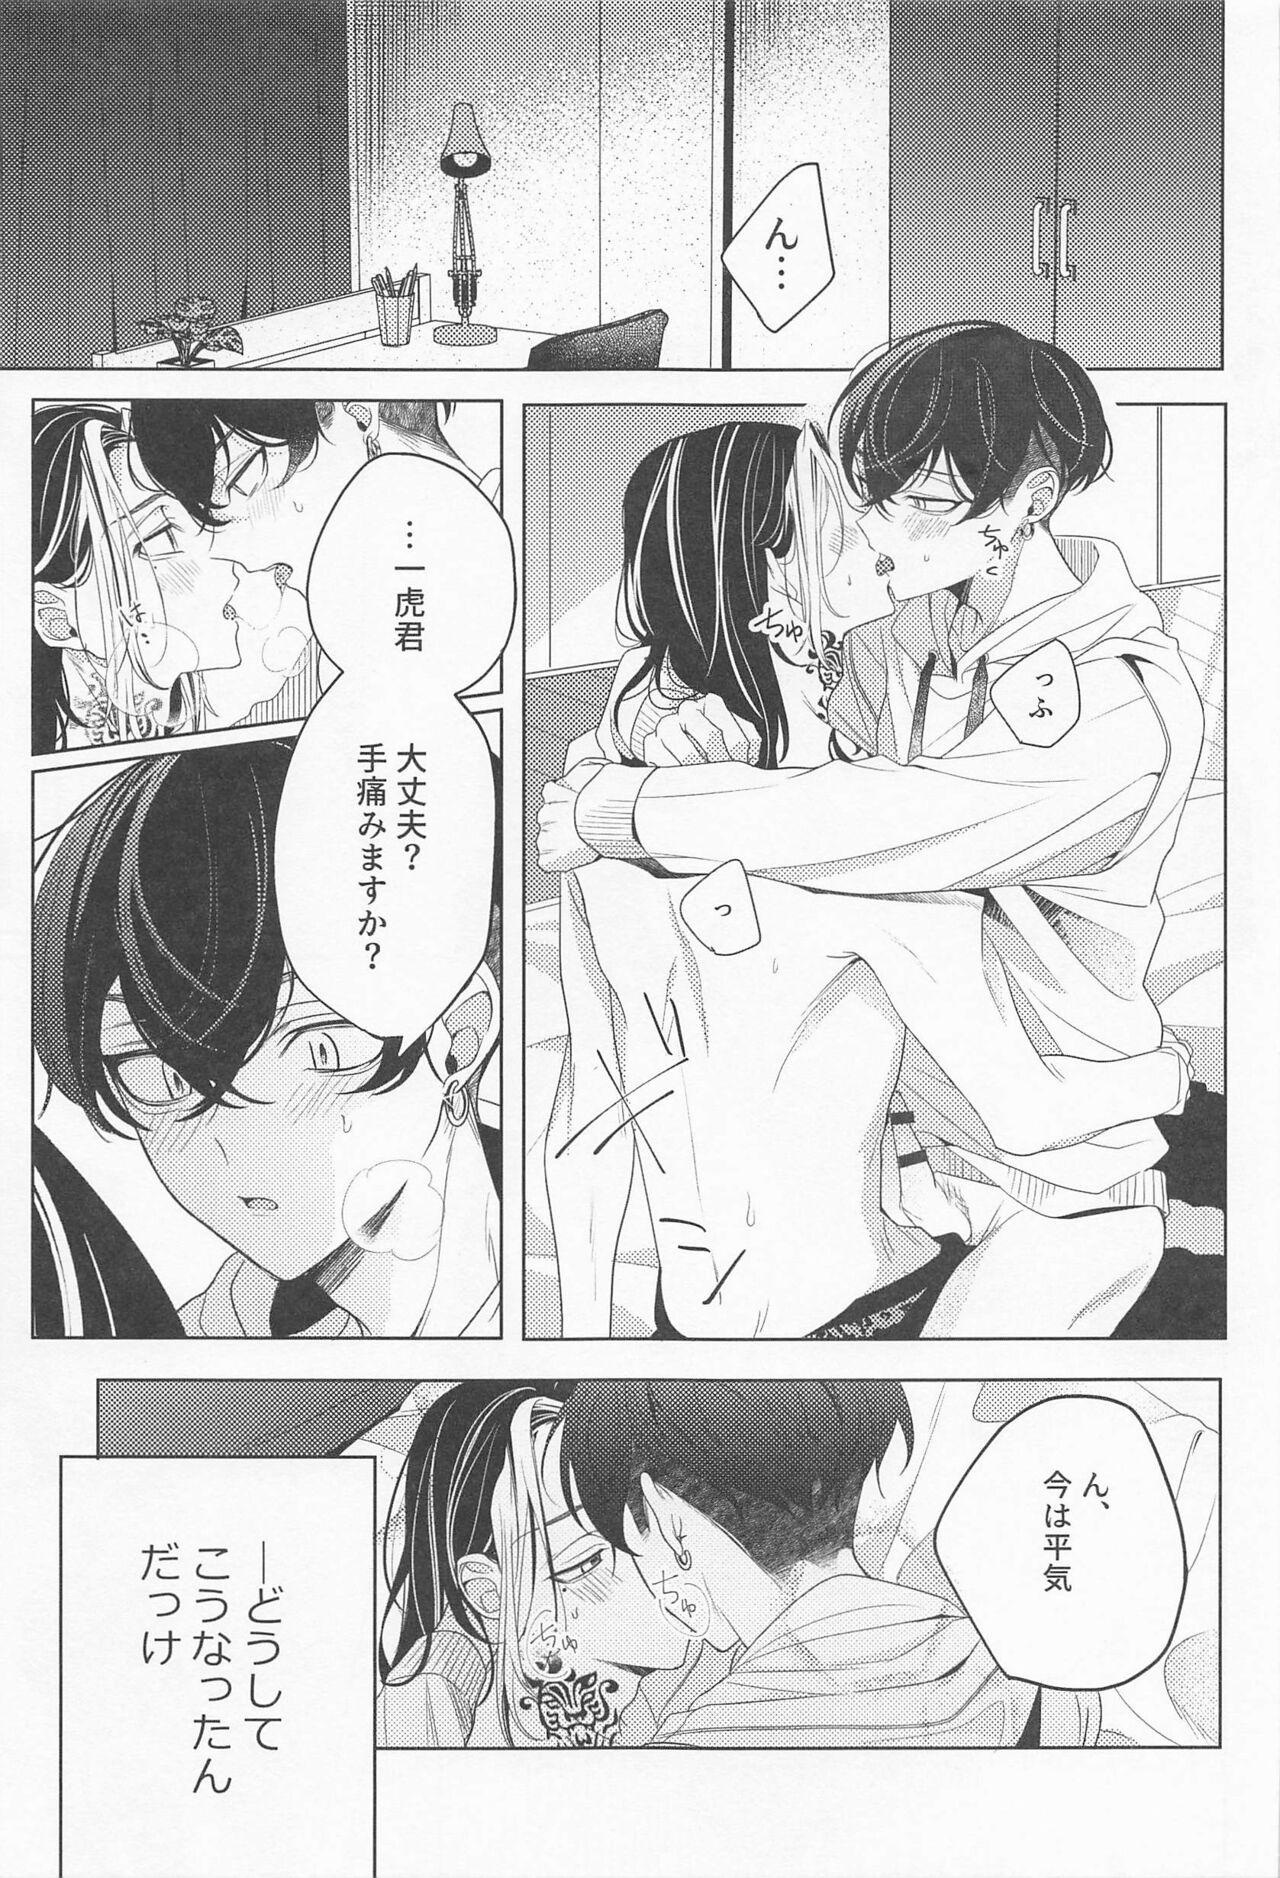 Her sukidakarashimpaishite - Tokyo revengers Highschool - Page 4